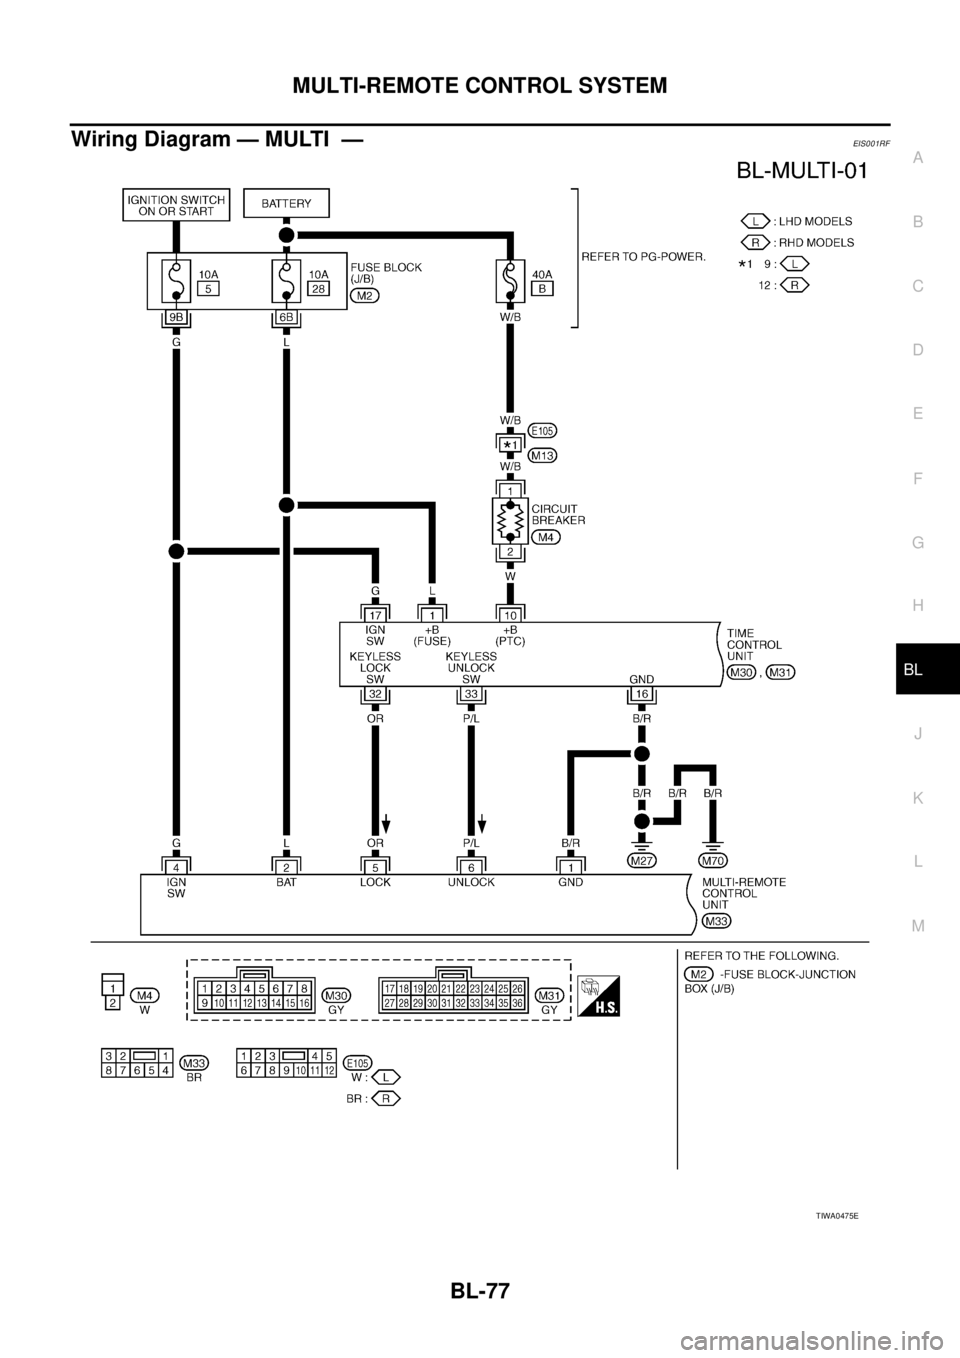 NISSAN X-TRAIL 2003  Service Repair Manual MULTI-REMOTE CONTROL SYSTEM
BL-77
C
D
E
F
G
H
J
K
L
MA
B
BL
 
Wiring Diagram — MULTI  —EIS001RF
TIWA0475E 